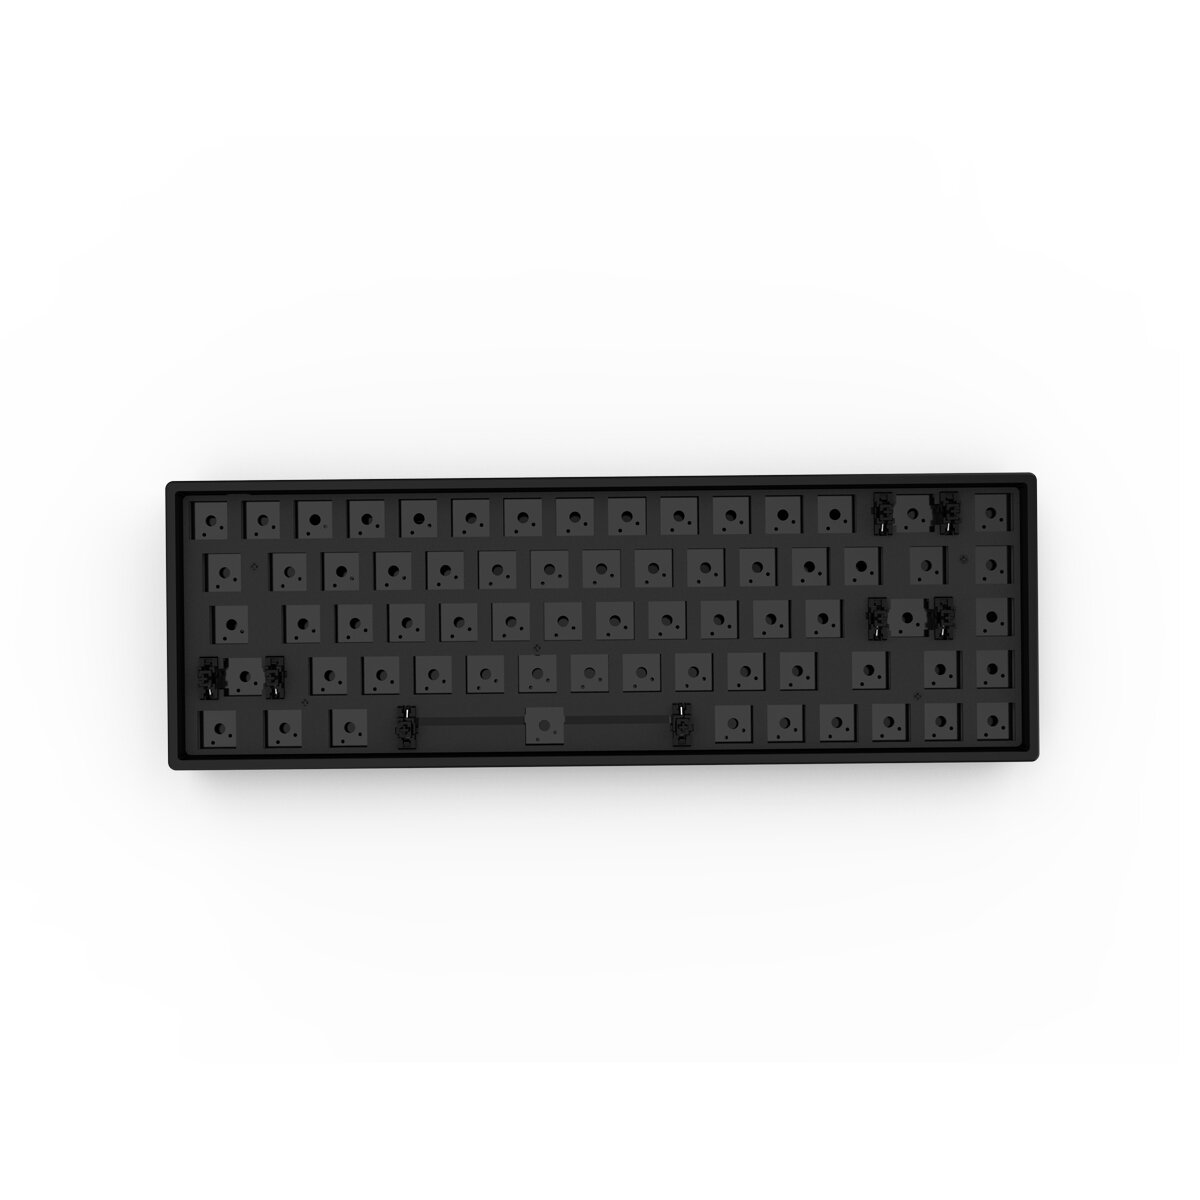 GamaKay CK68 Keyboard Customized Kit 68 Keys Triple Mode RGB Hot Swappable 3pin/5pin Switch 65% Programmable Wired bluet